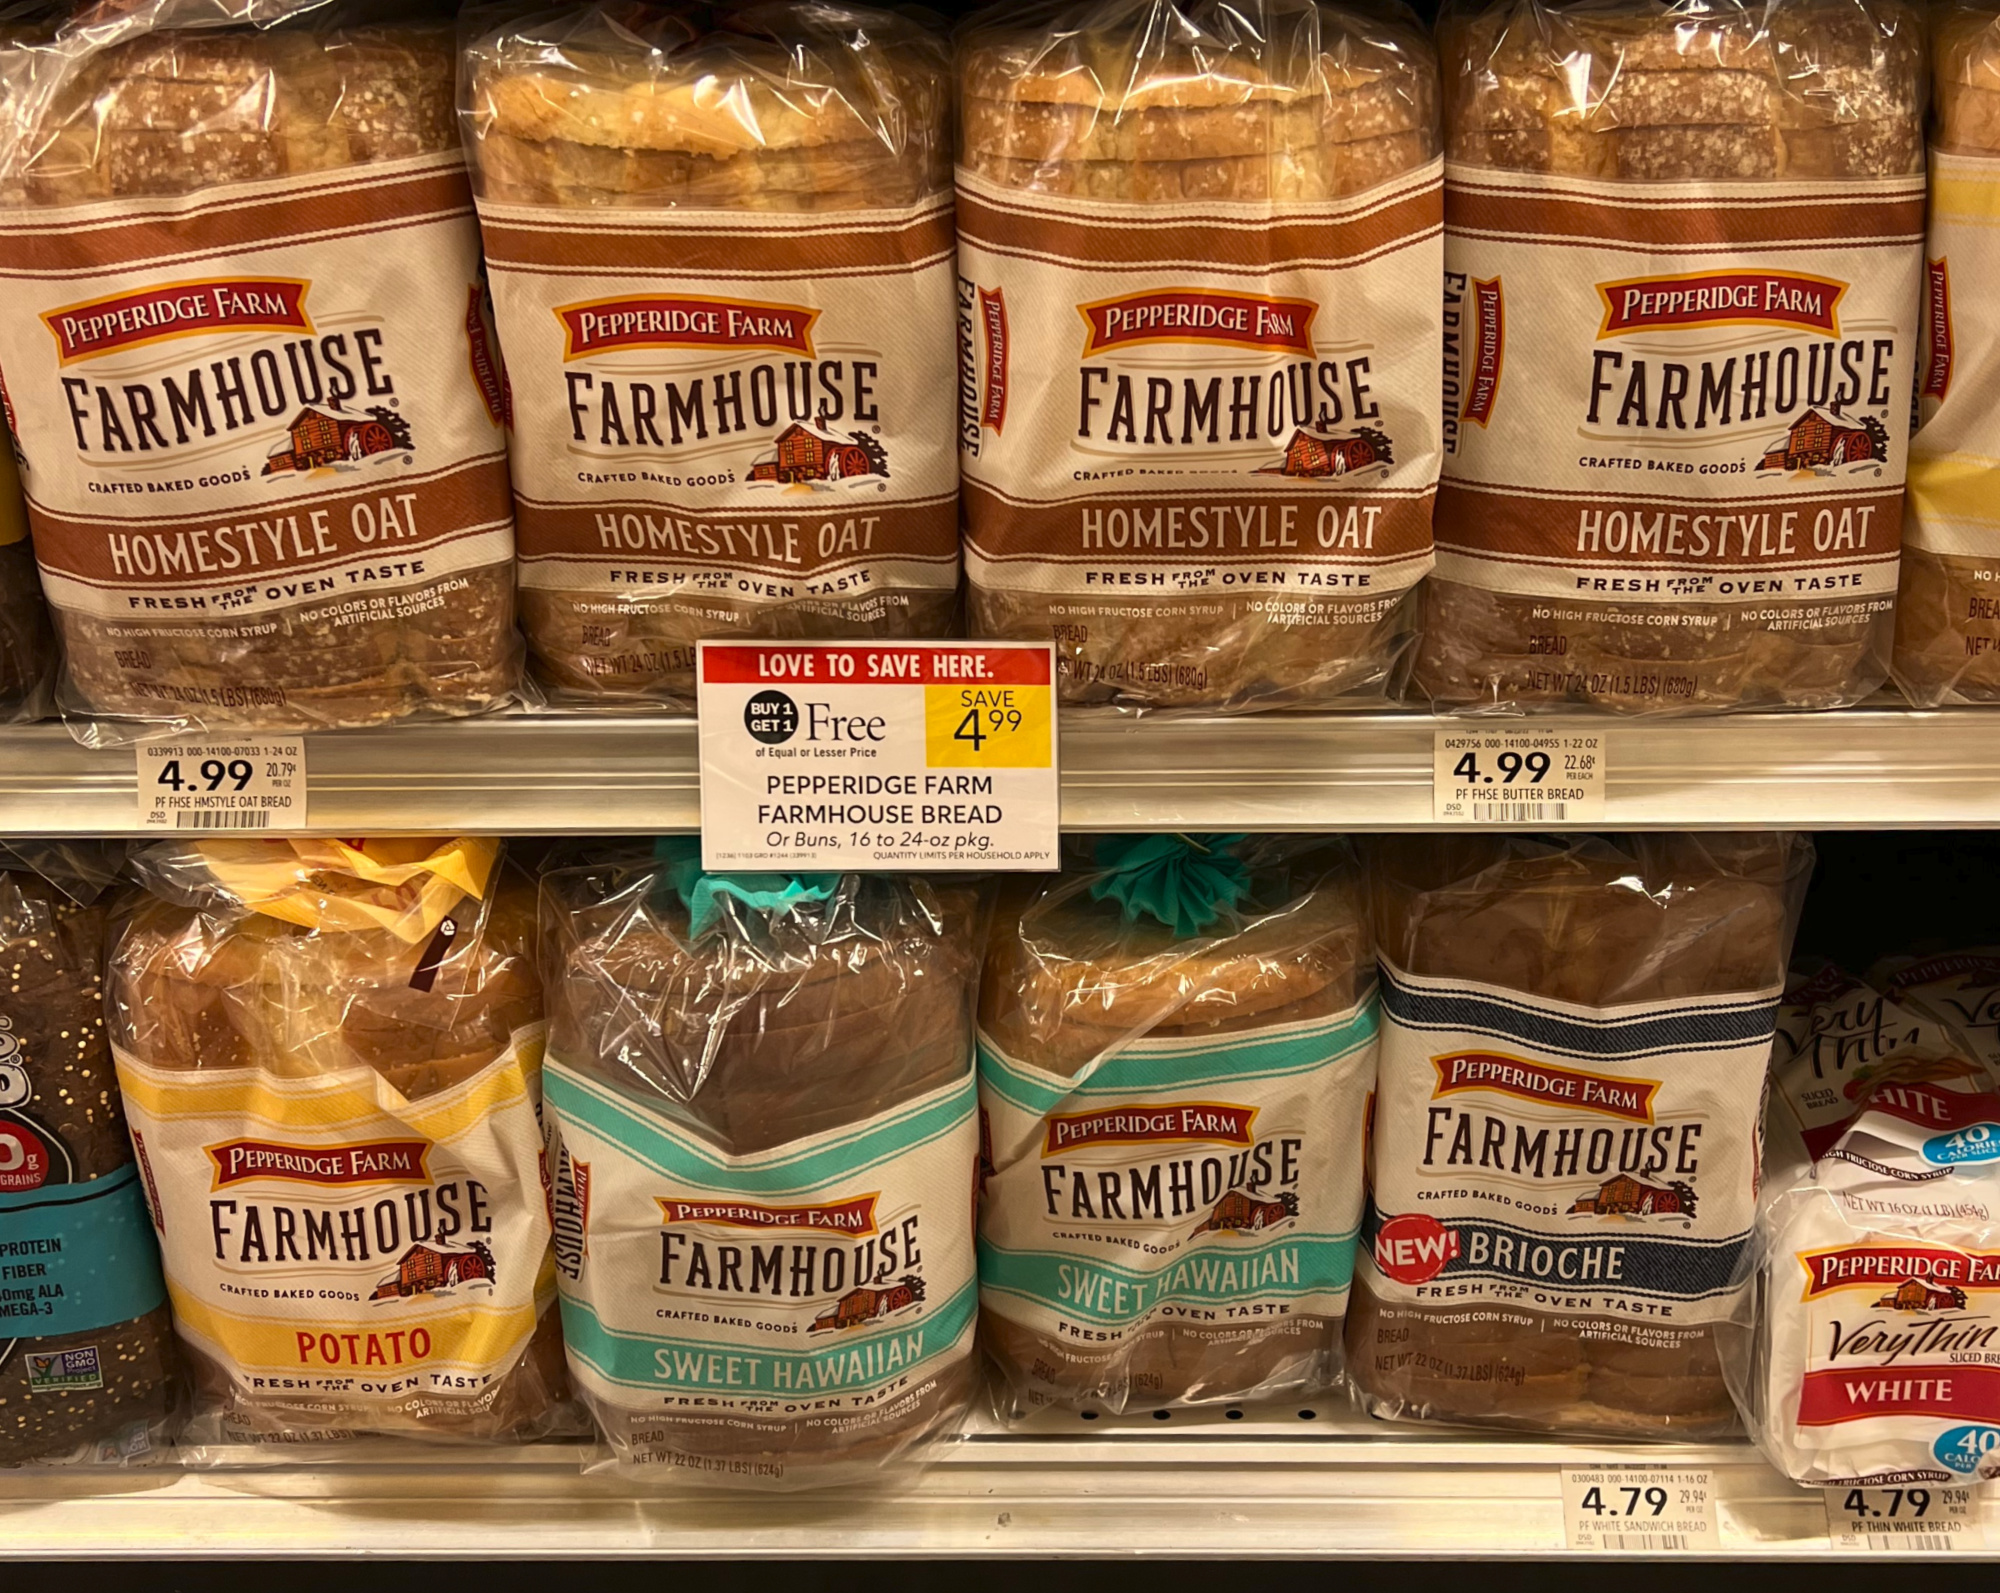 Pepperidge Farm Farmhouse Brioche Bread Just $1.50 Per Loaf At Publix -  iHeartPublix